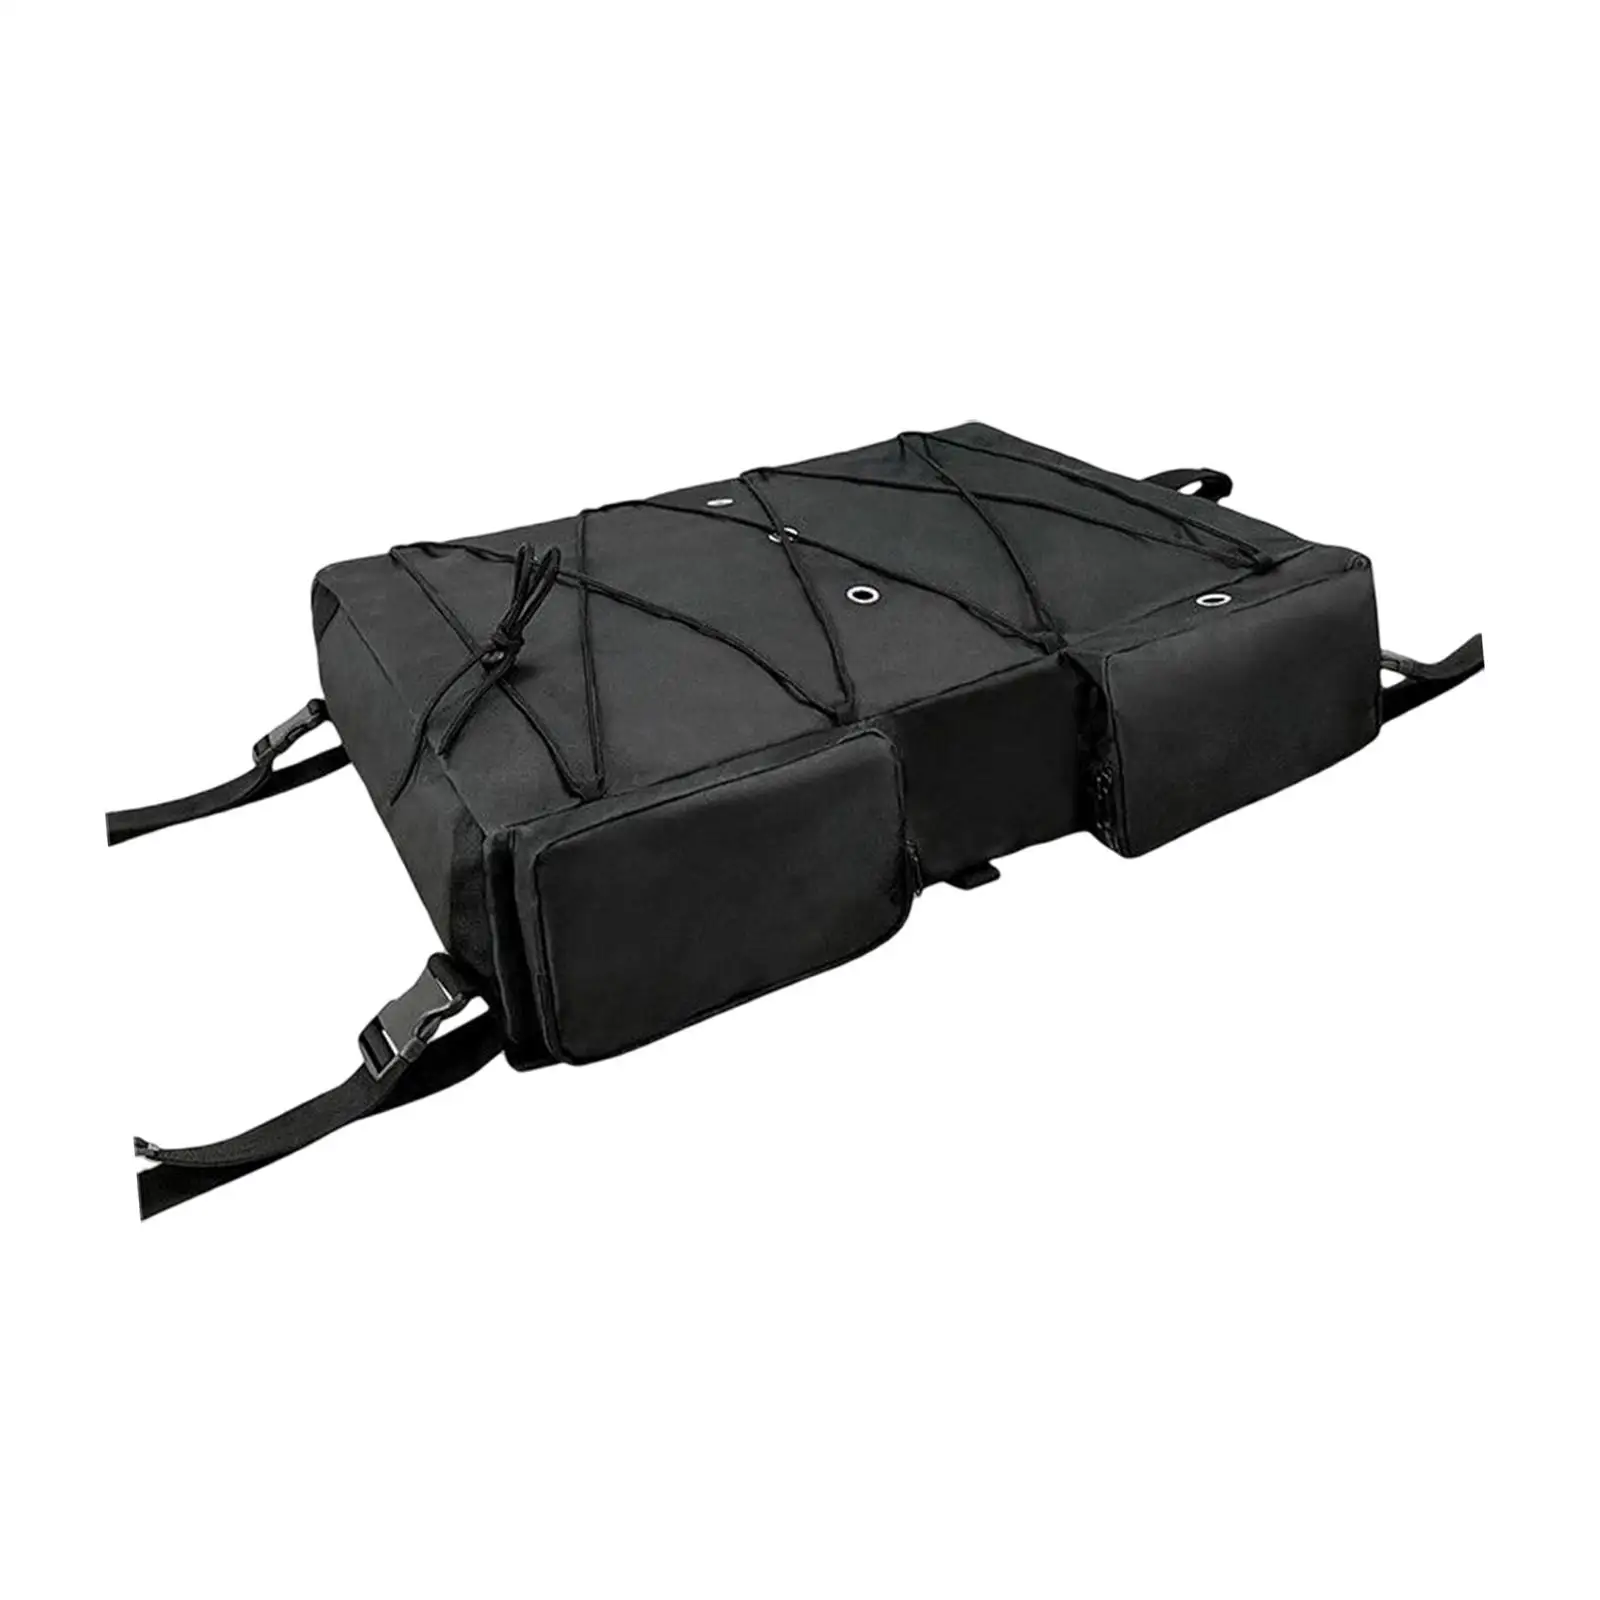 Bimini Top Storage Bag 600D Jacket Storage Bag Bimini Top T Top Overhead Storage Bags for T Top Boats